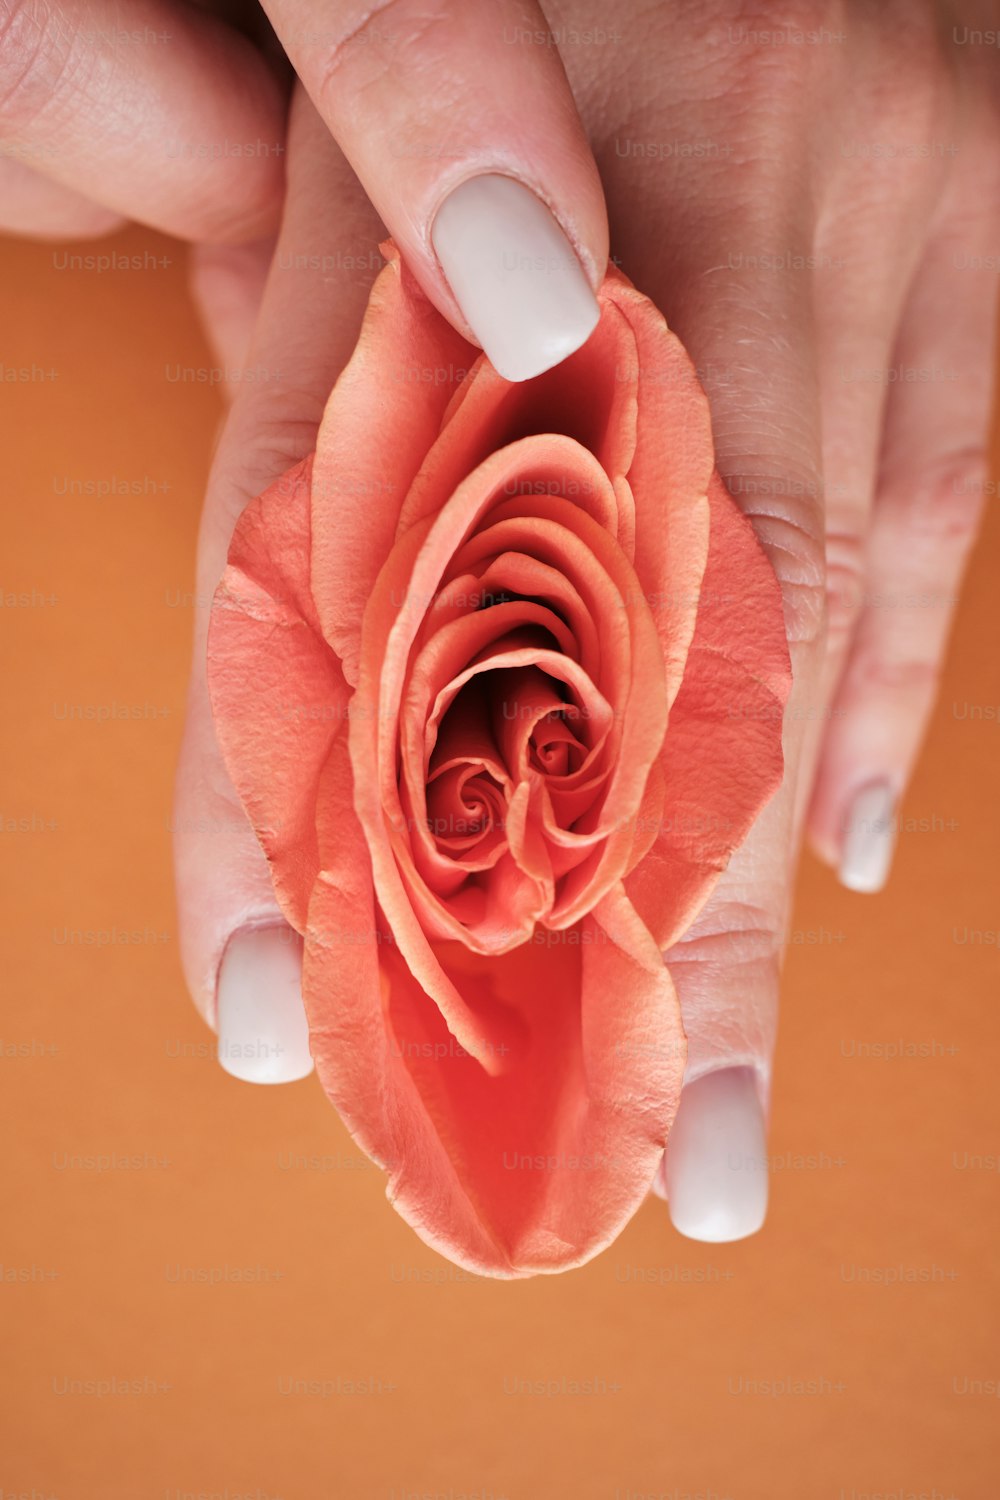 a woman's hands holding a pink flower